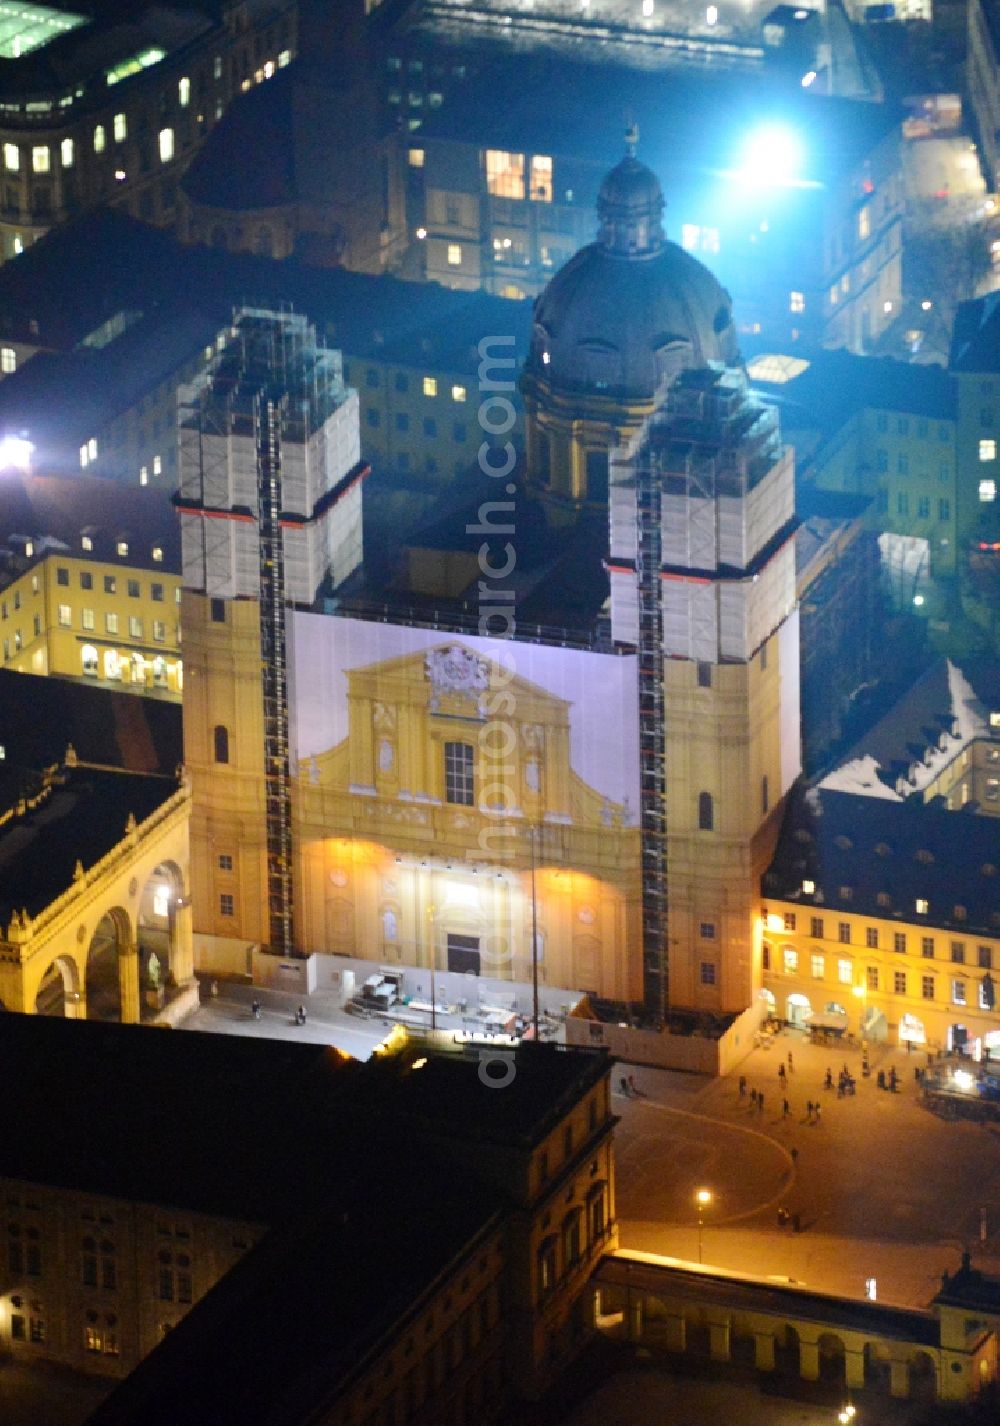 München at night from above - Night aerial view of the church at Theatinerkirche on Salvatorplatz in Munich in Bavaria